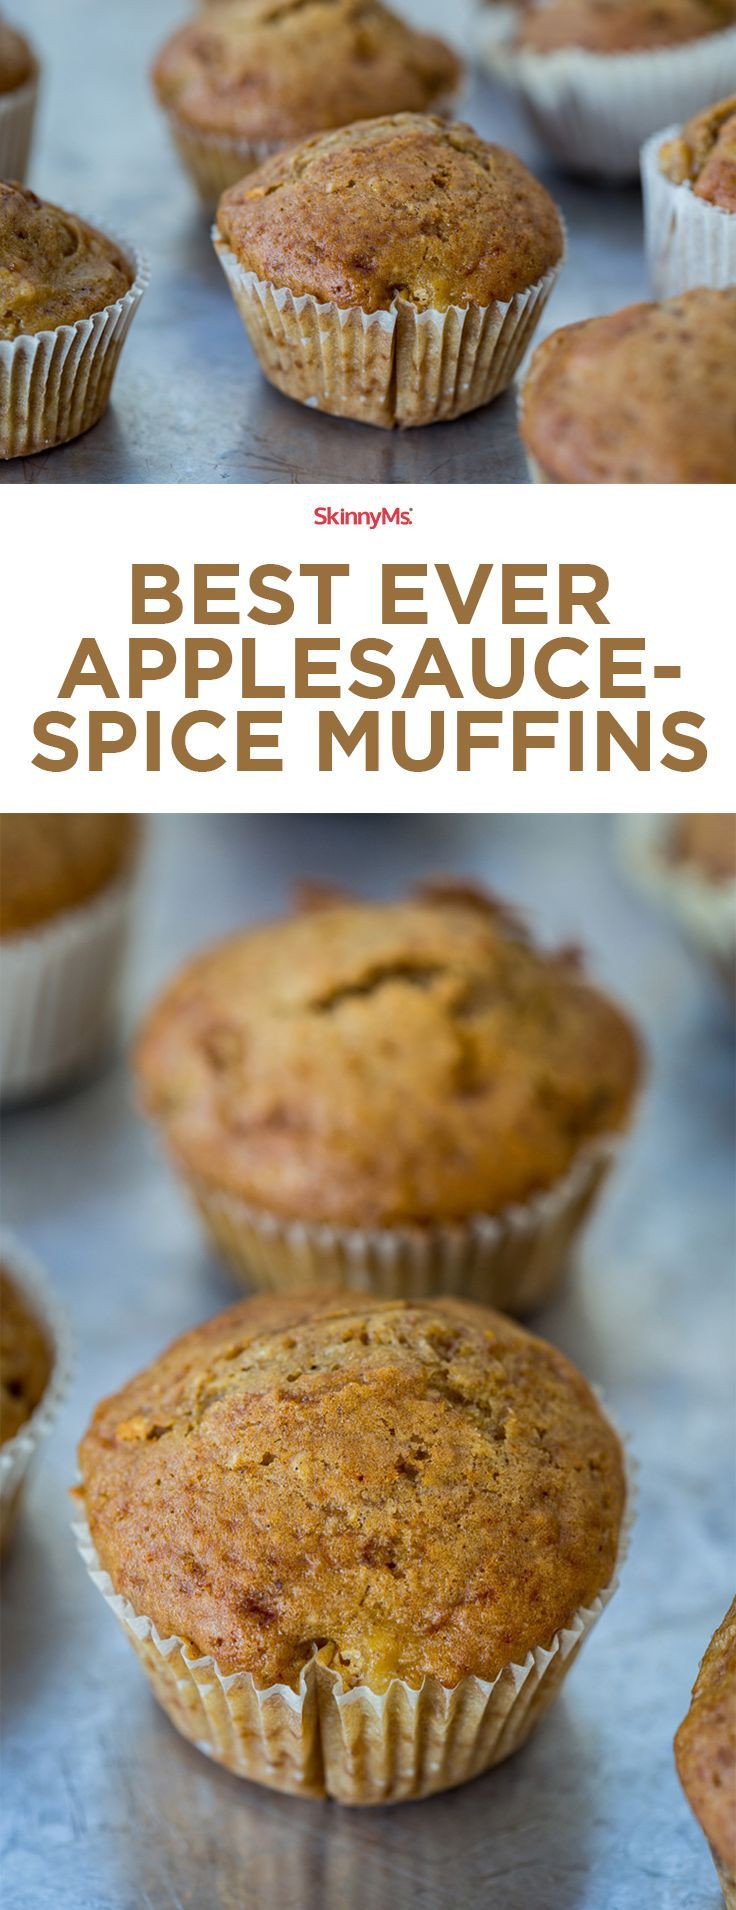 Applesauce Muffins Paleo
 Applesauce Spice Muffins Recipe